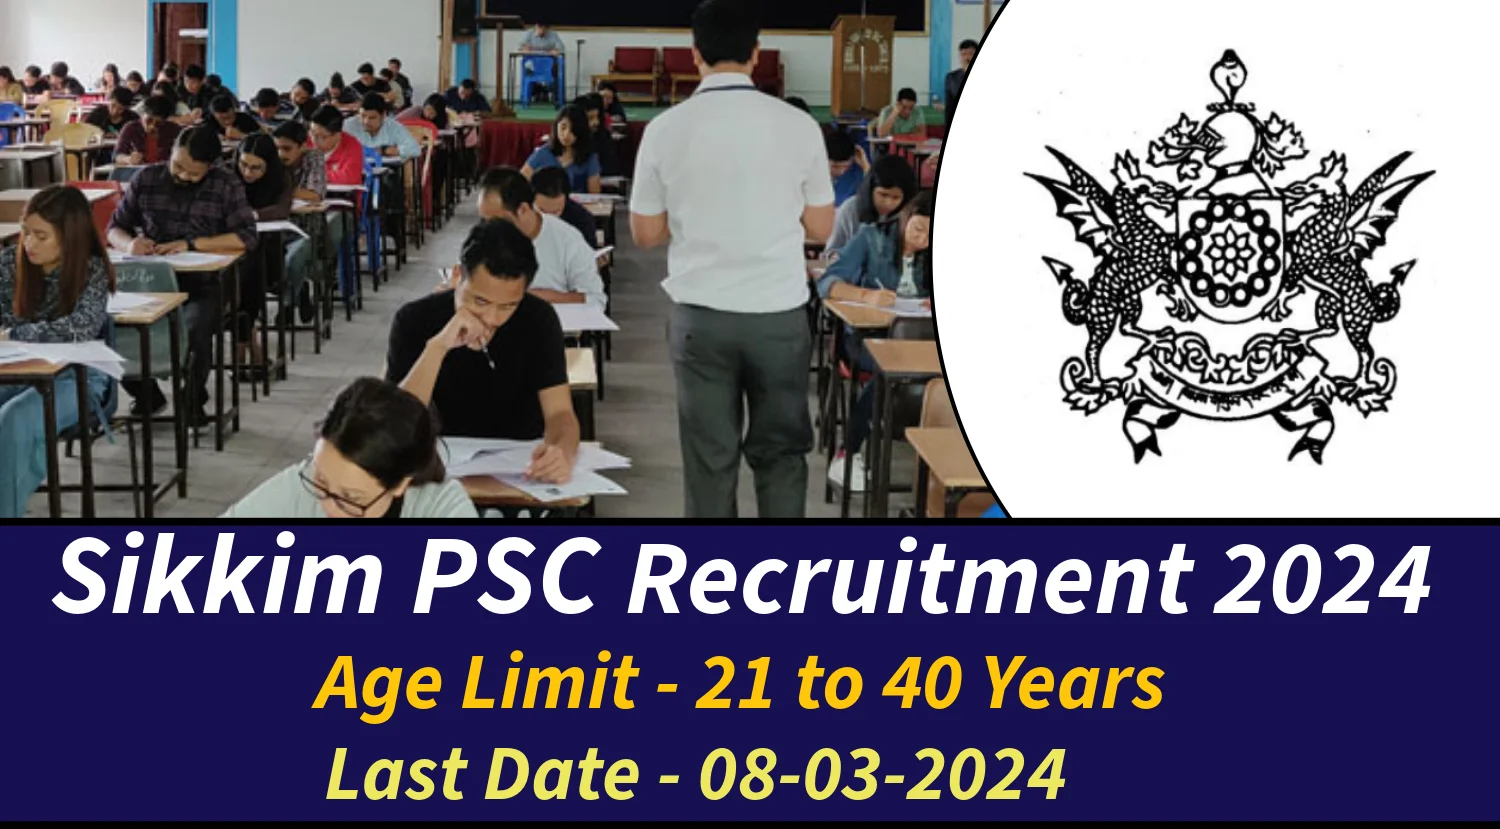 Sikkim PSC Recruitment 2024 Notification